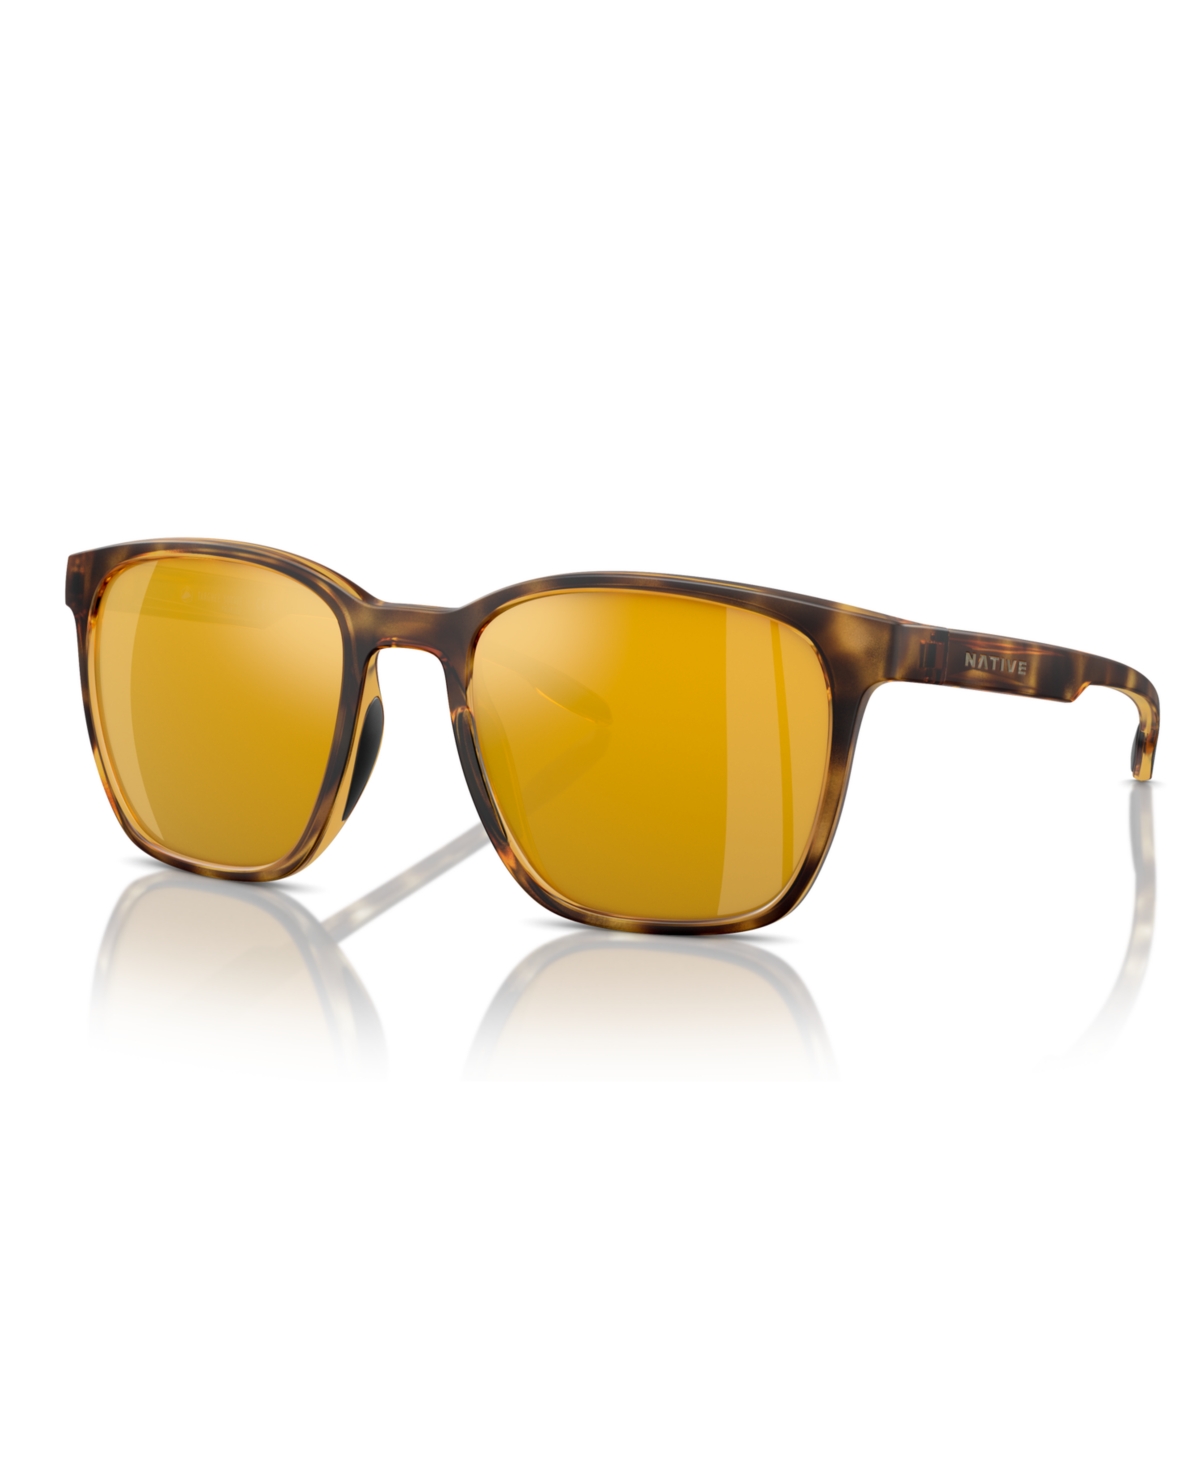 Native Eyewear Unisex Polarized Sunglasses, Targhee Square Xd9046 In Matte Tortoise,brown